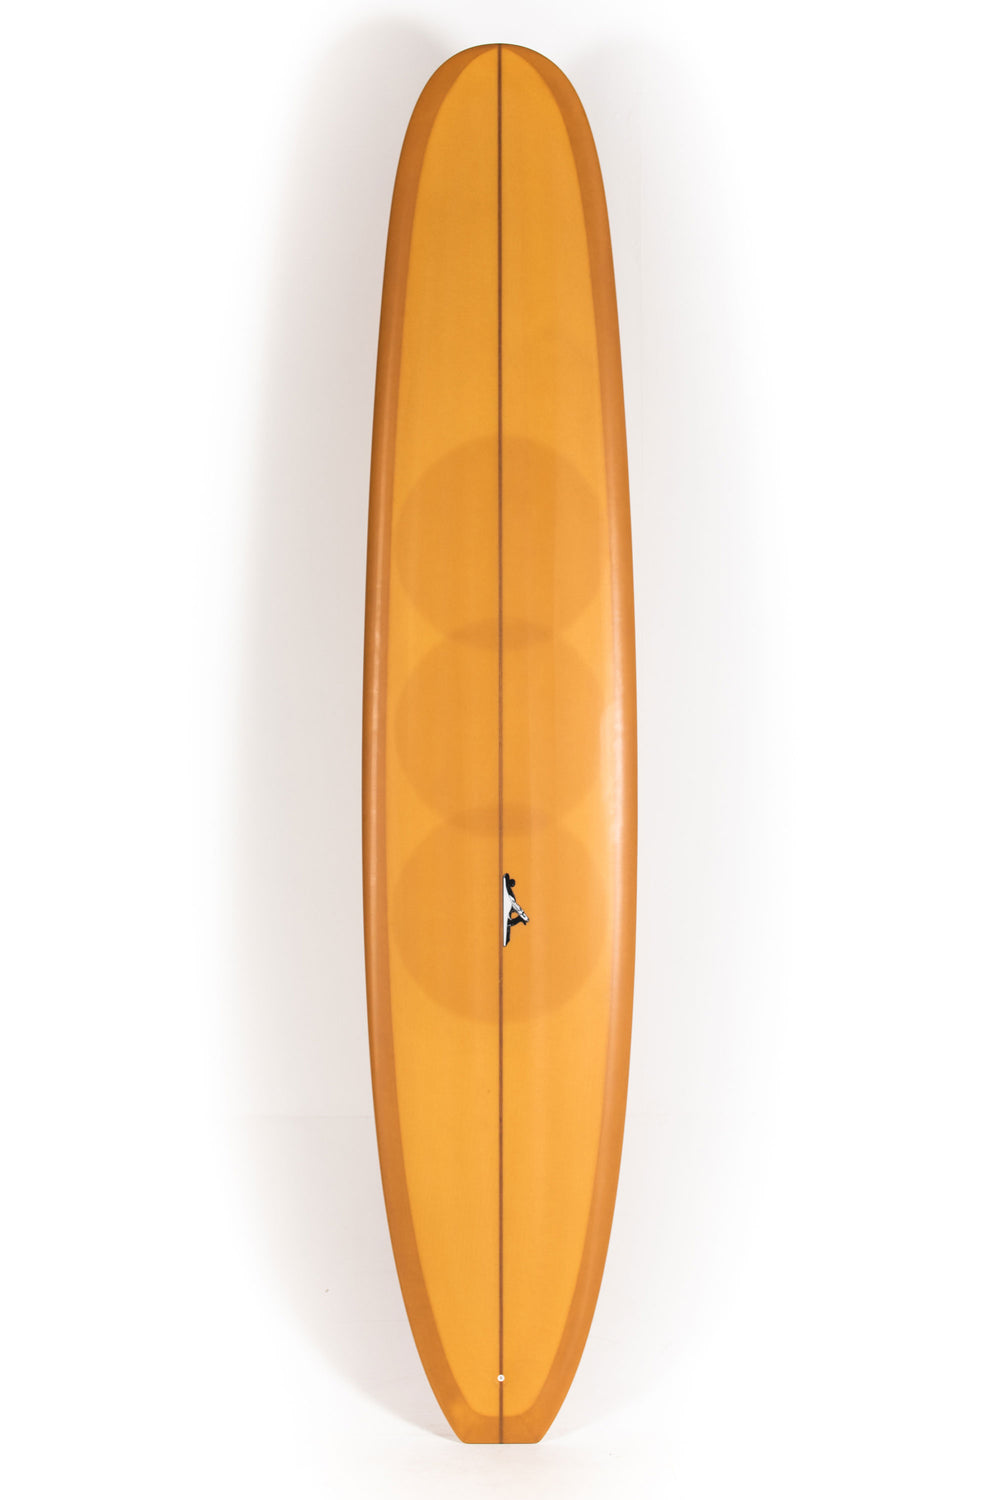 Pukas Surf Shop - Thomas Surfboards - KEEPER - 9'6